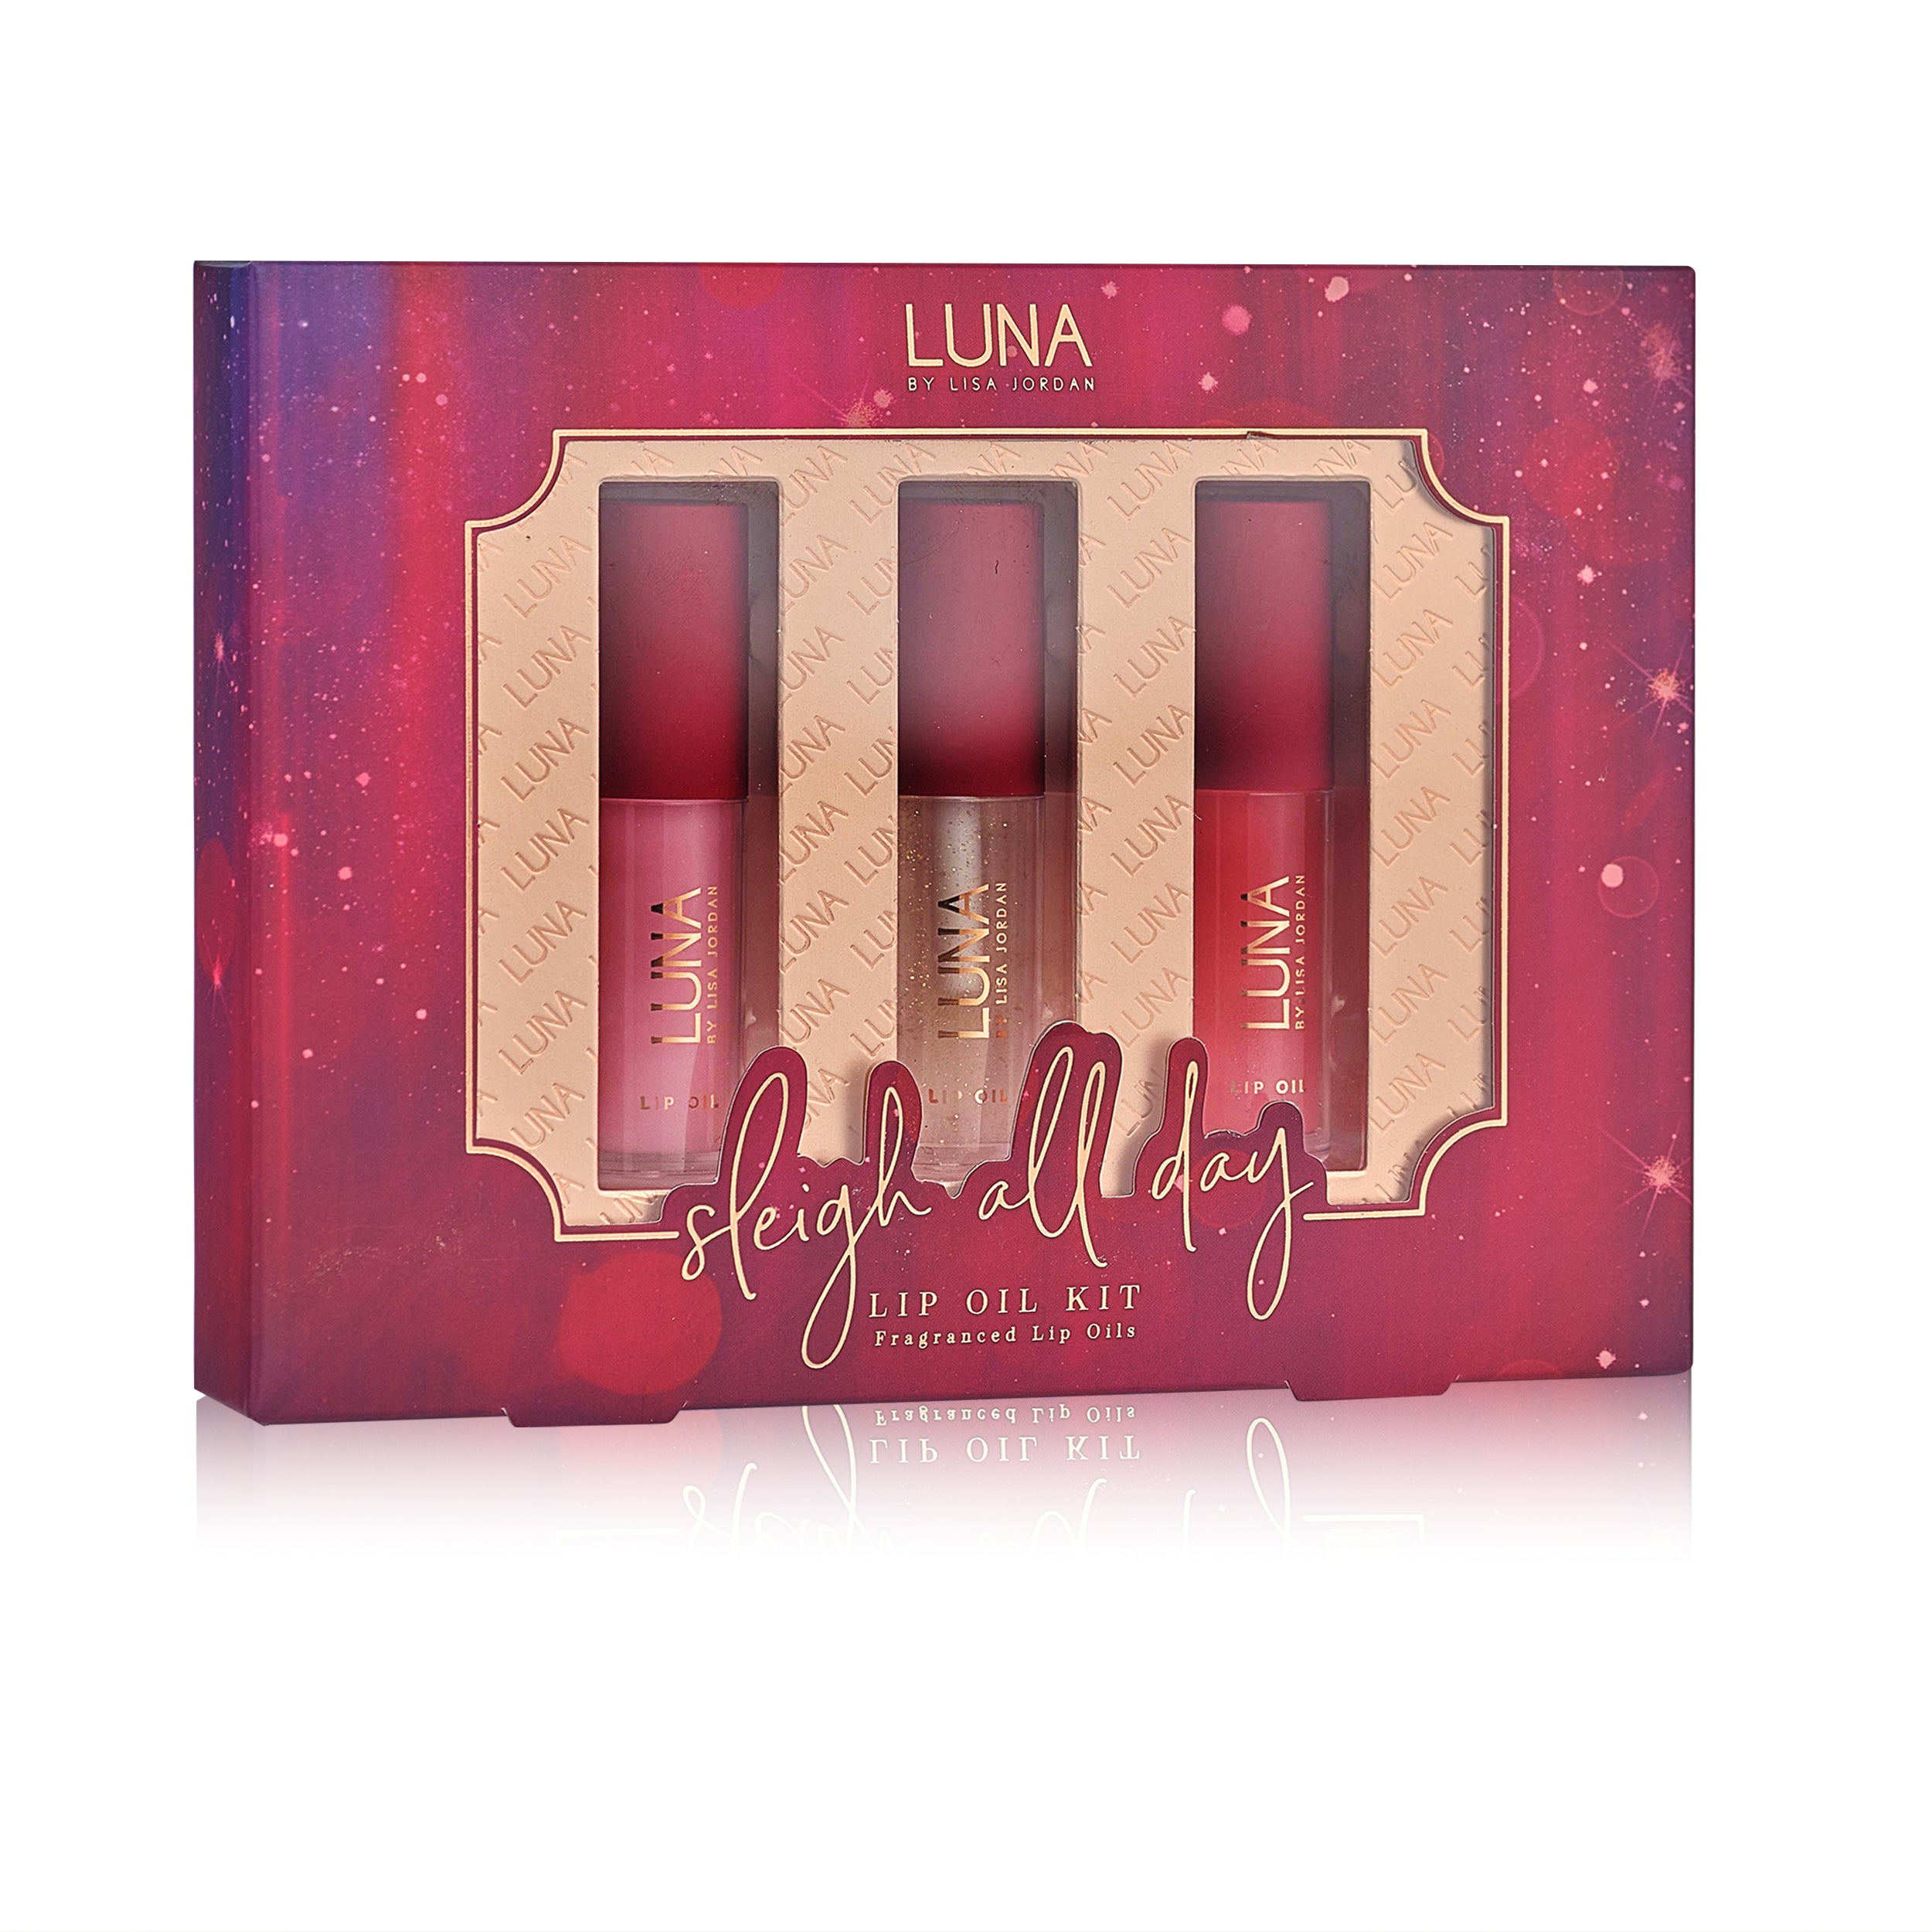 Luna by Lisa Christmas set Sleigh all day lip oil kit